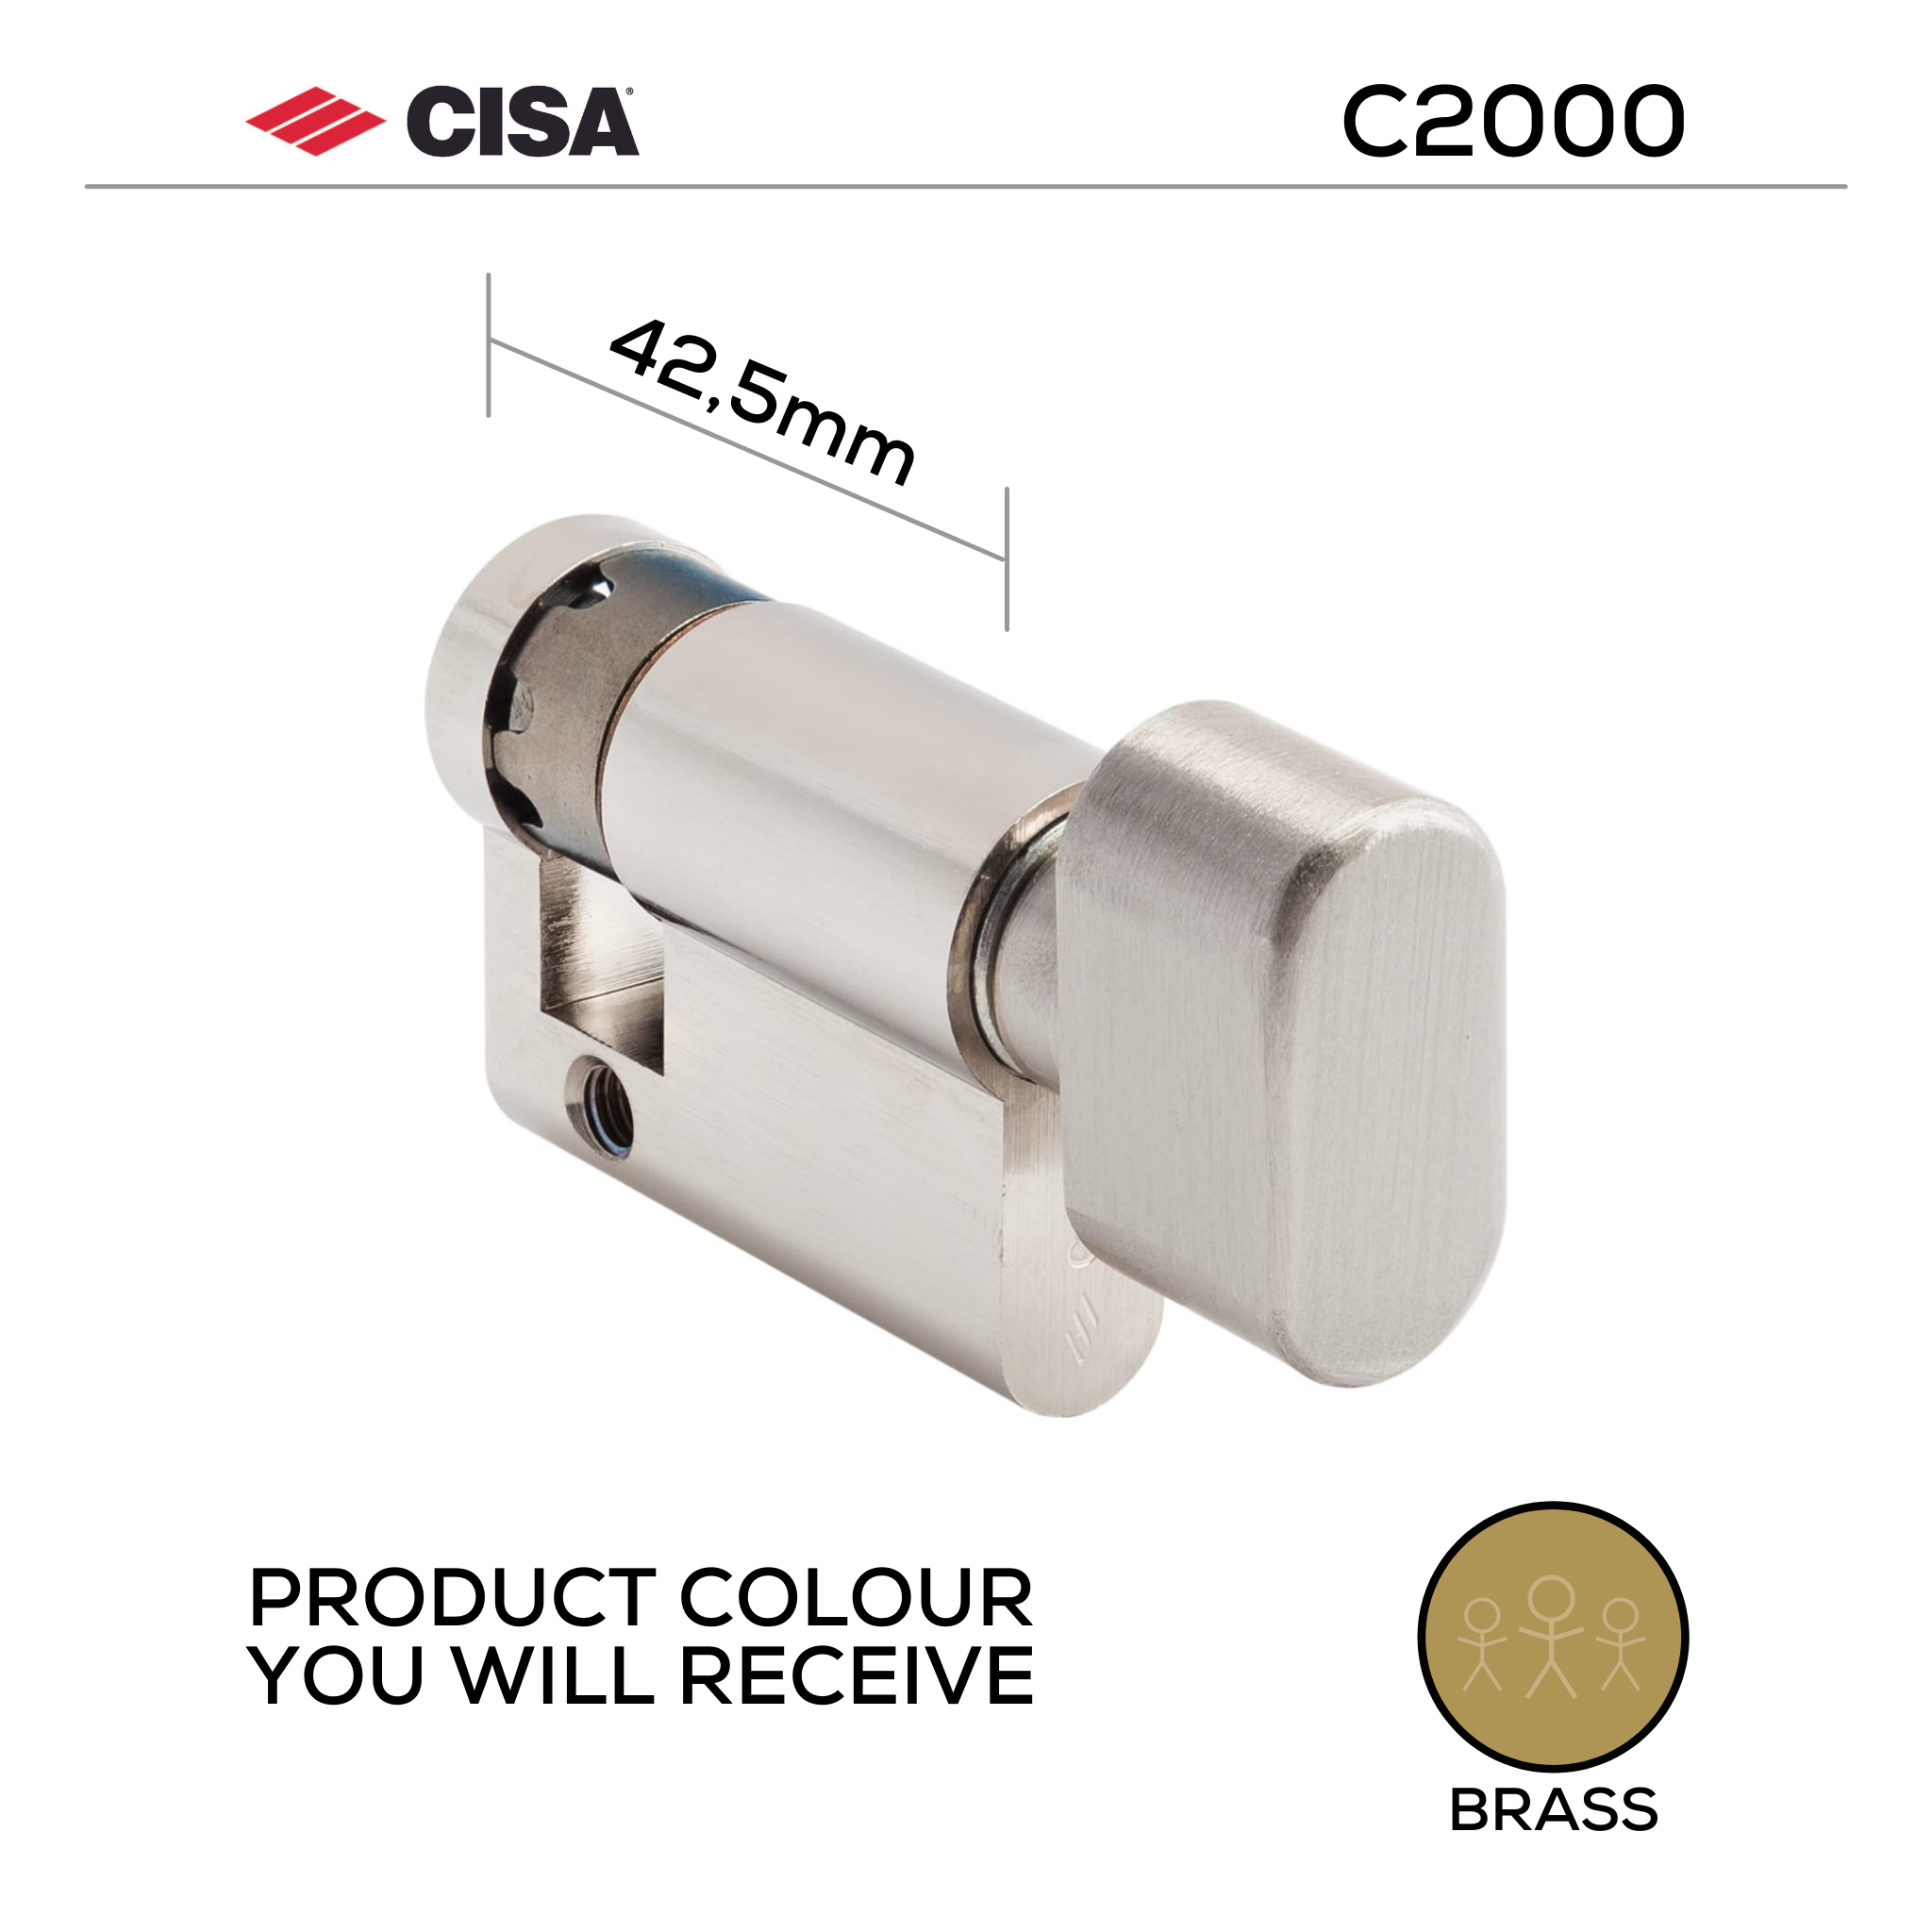 09090-02-00-KD, 42,5mm - 32.5/10, Oval Half (Single Cylinder), C2000, Thumbturn, Keyed to Differ (Standard), Brass, CISA